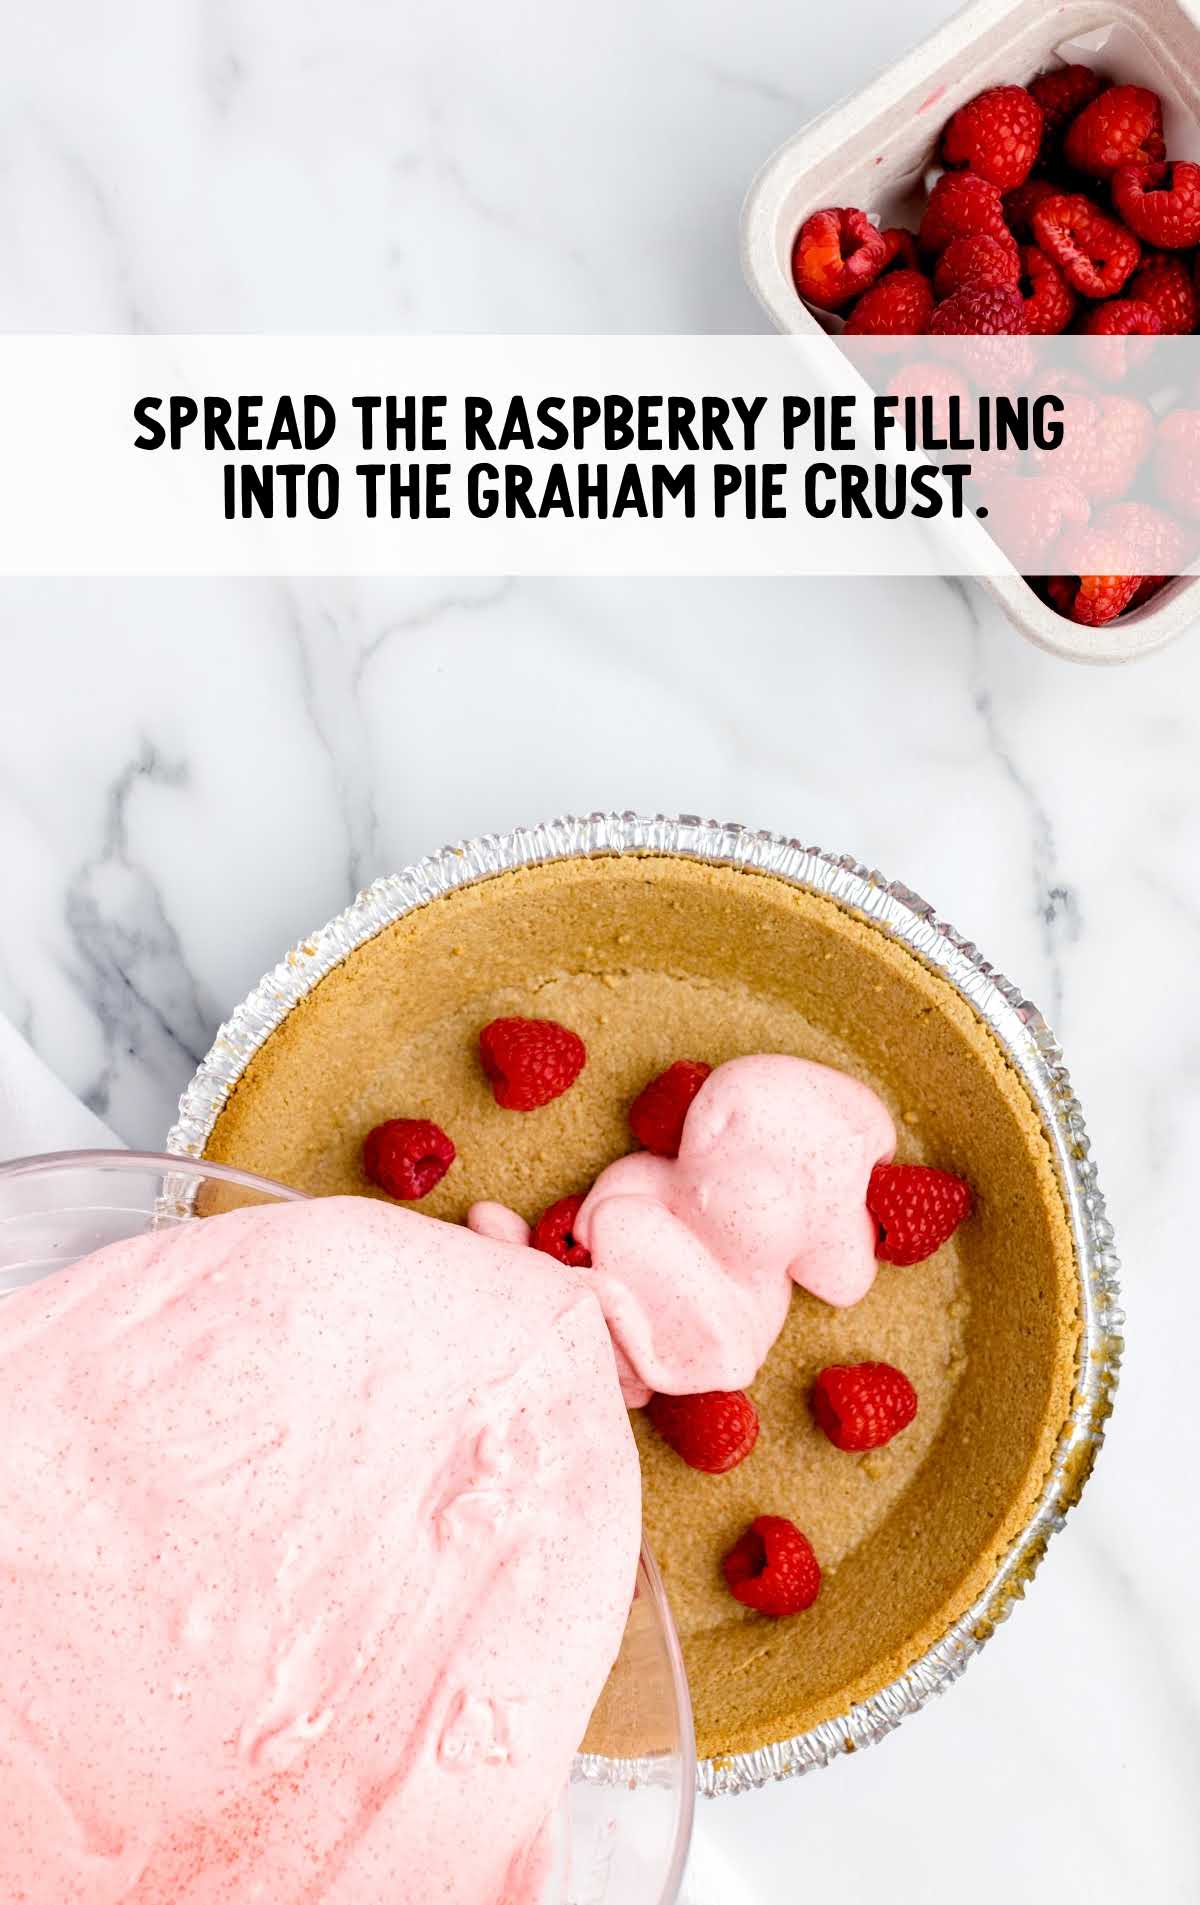 raspberry pie filling spread into the graham crust